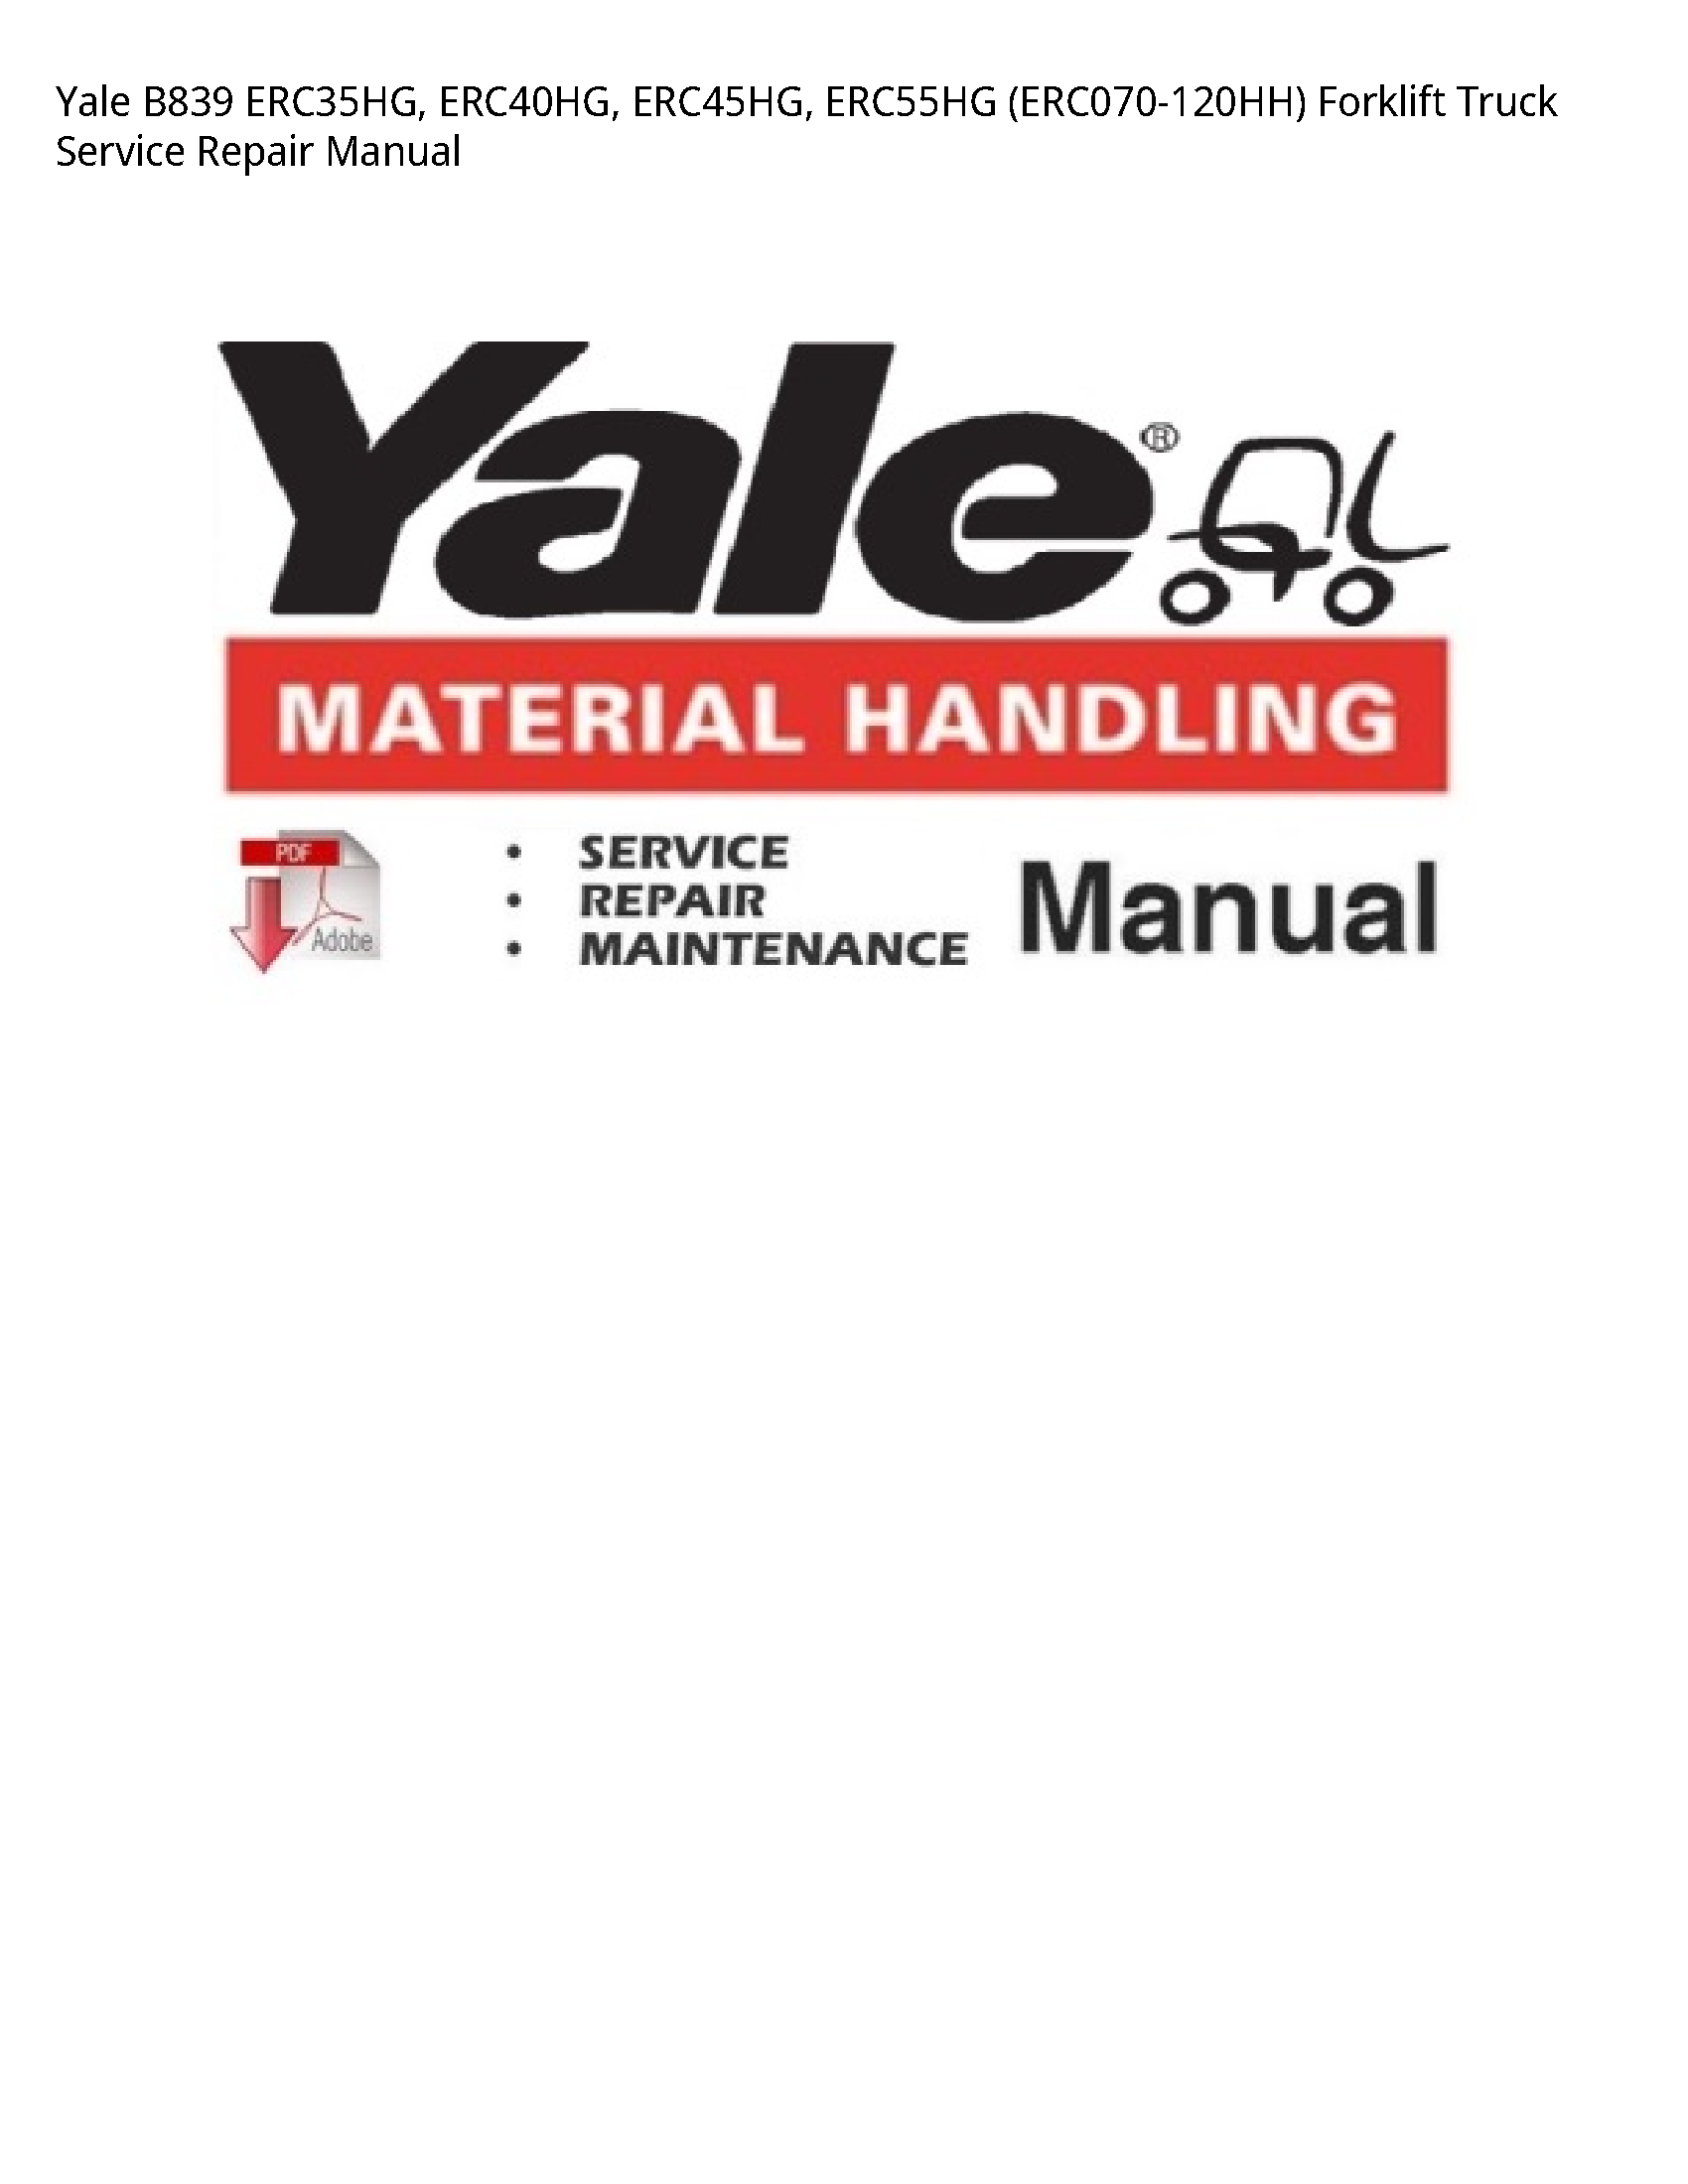 Yale B839 Forklift Truck manual